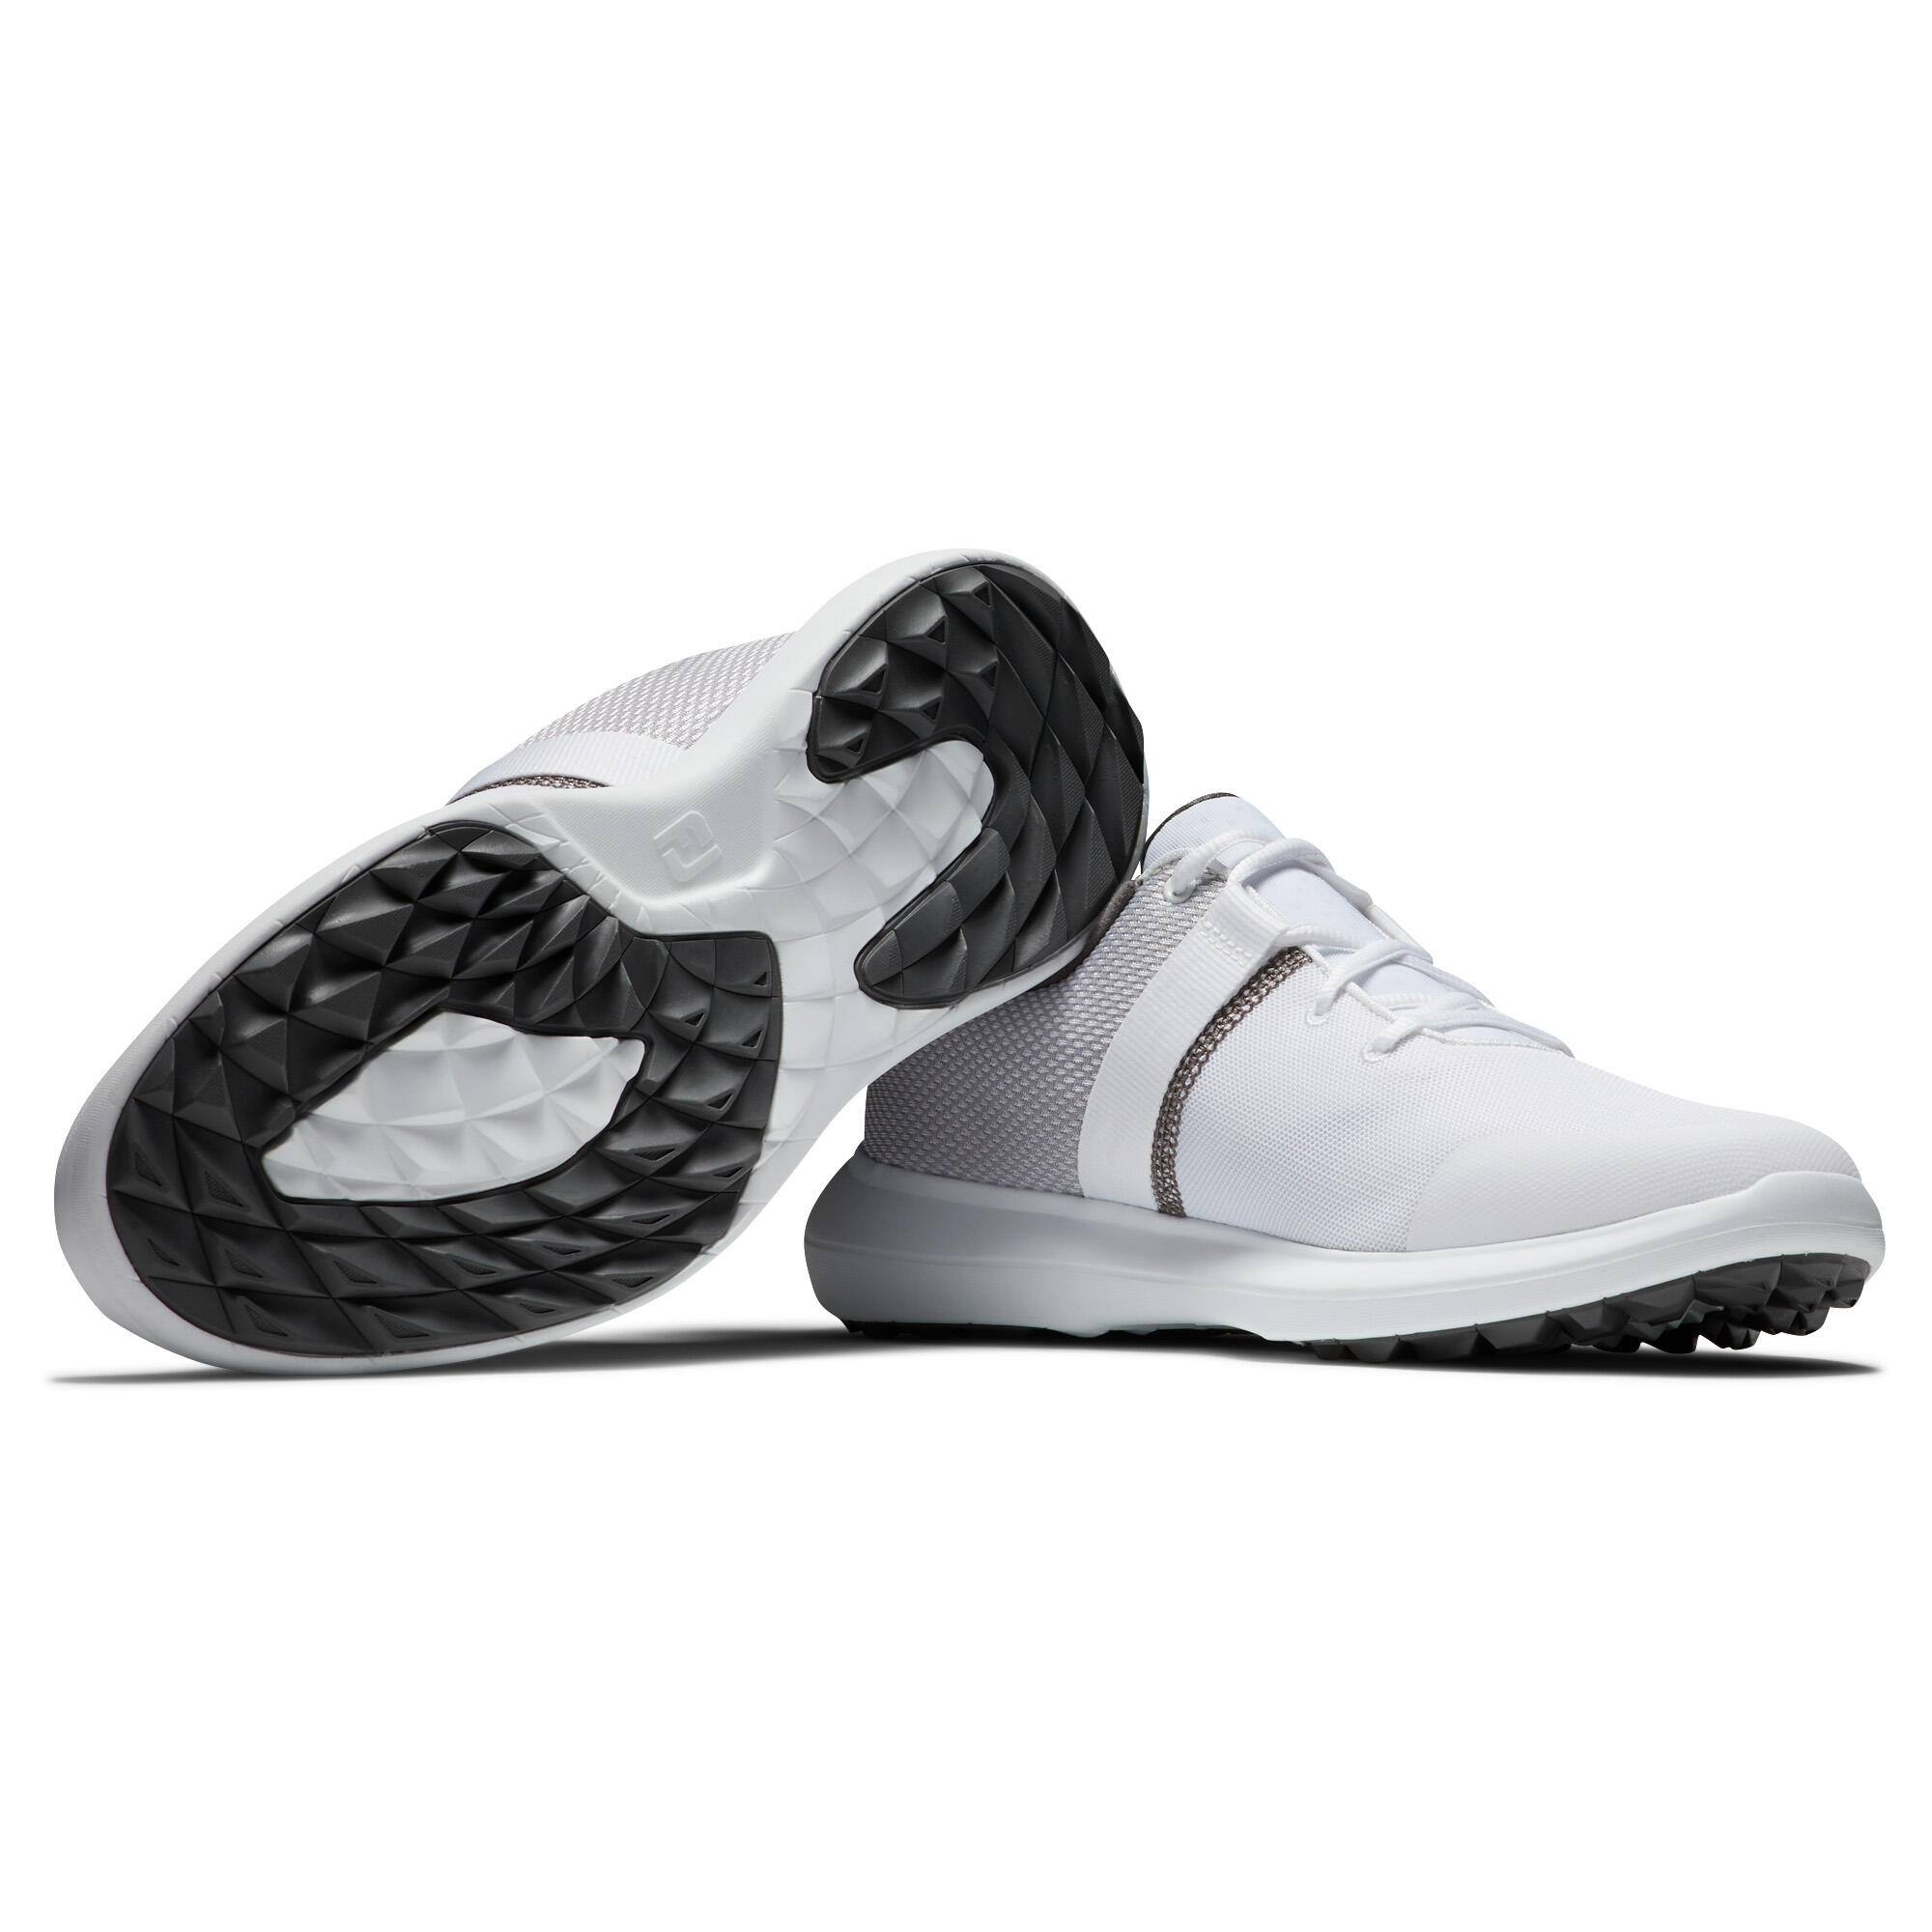 Men’s golf shoes FJ Flex - white and grey 6/6